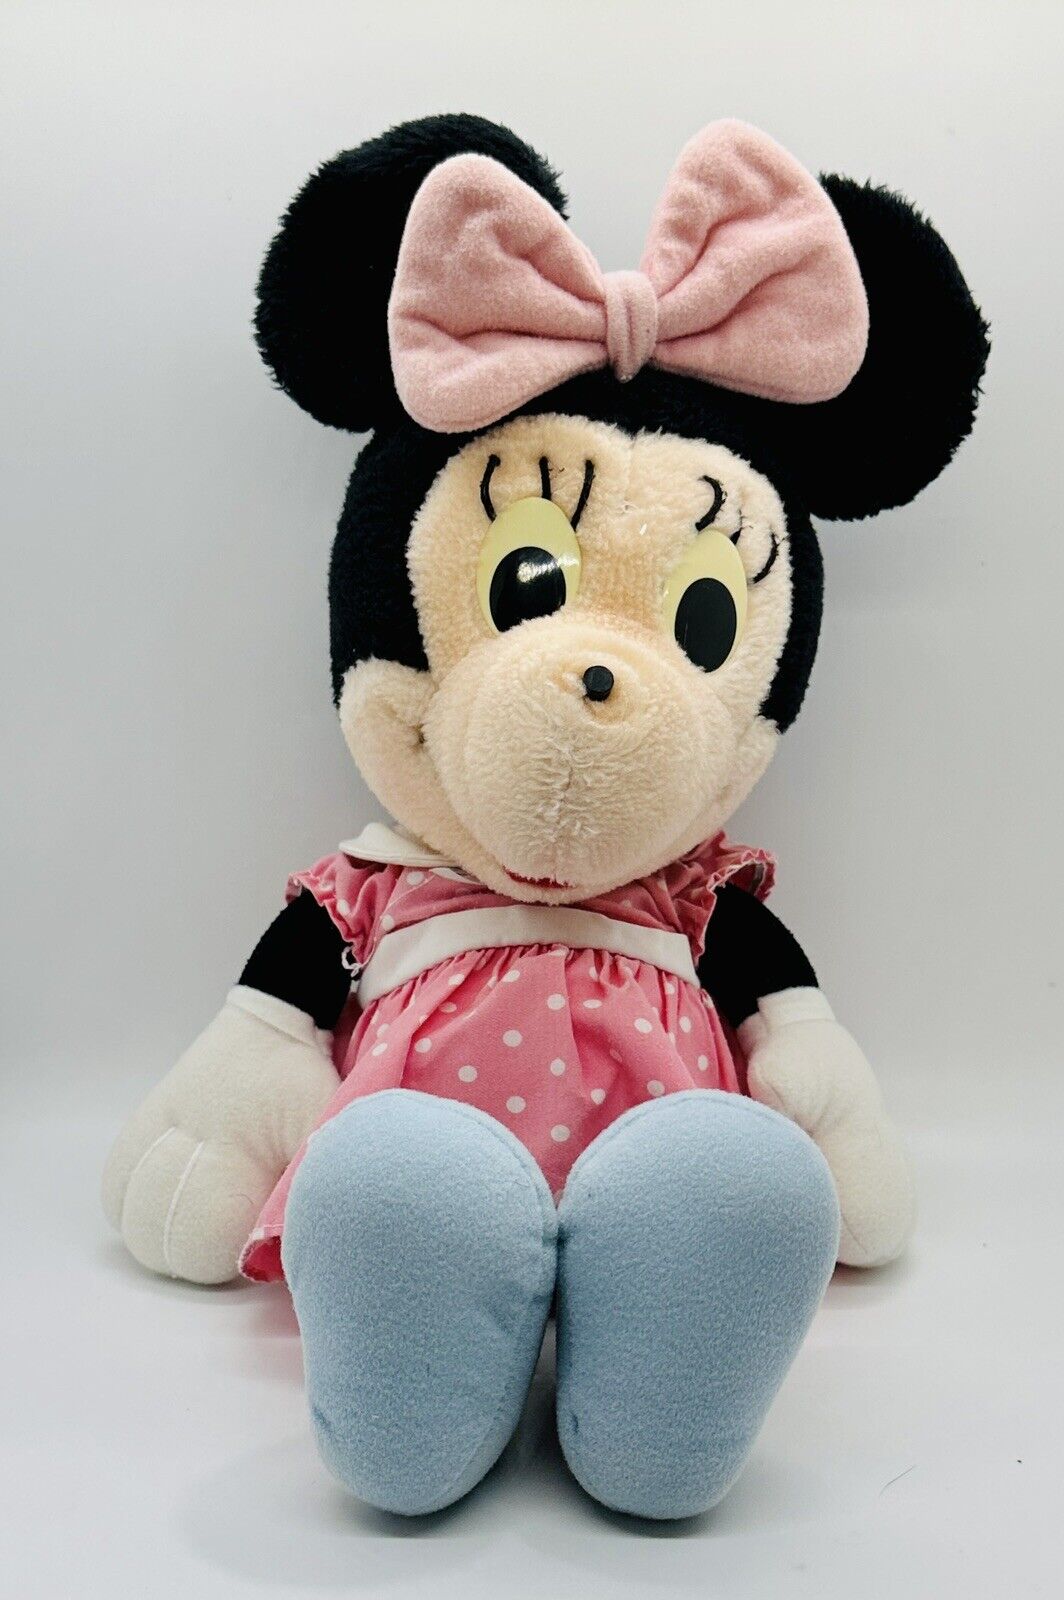 Vintage 1980s Playskool Pink Poka-Dot Minnie Mouse #70135